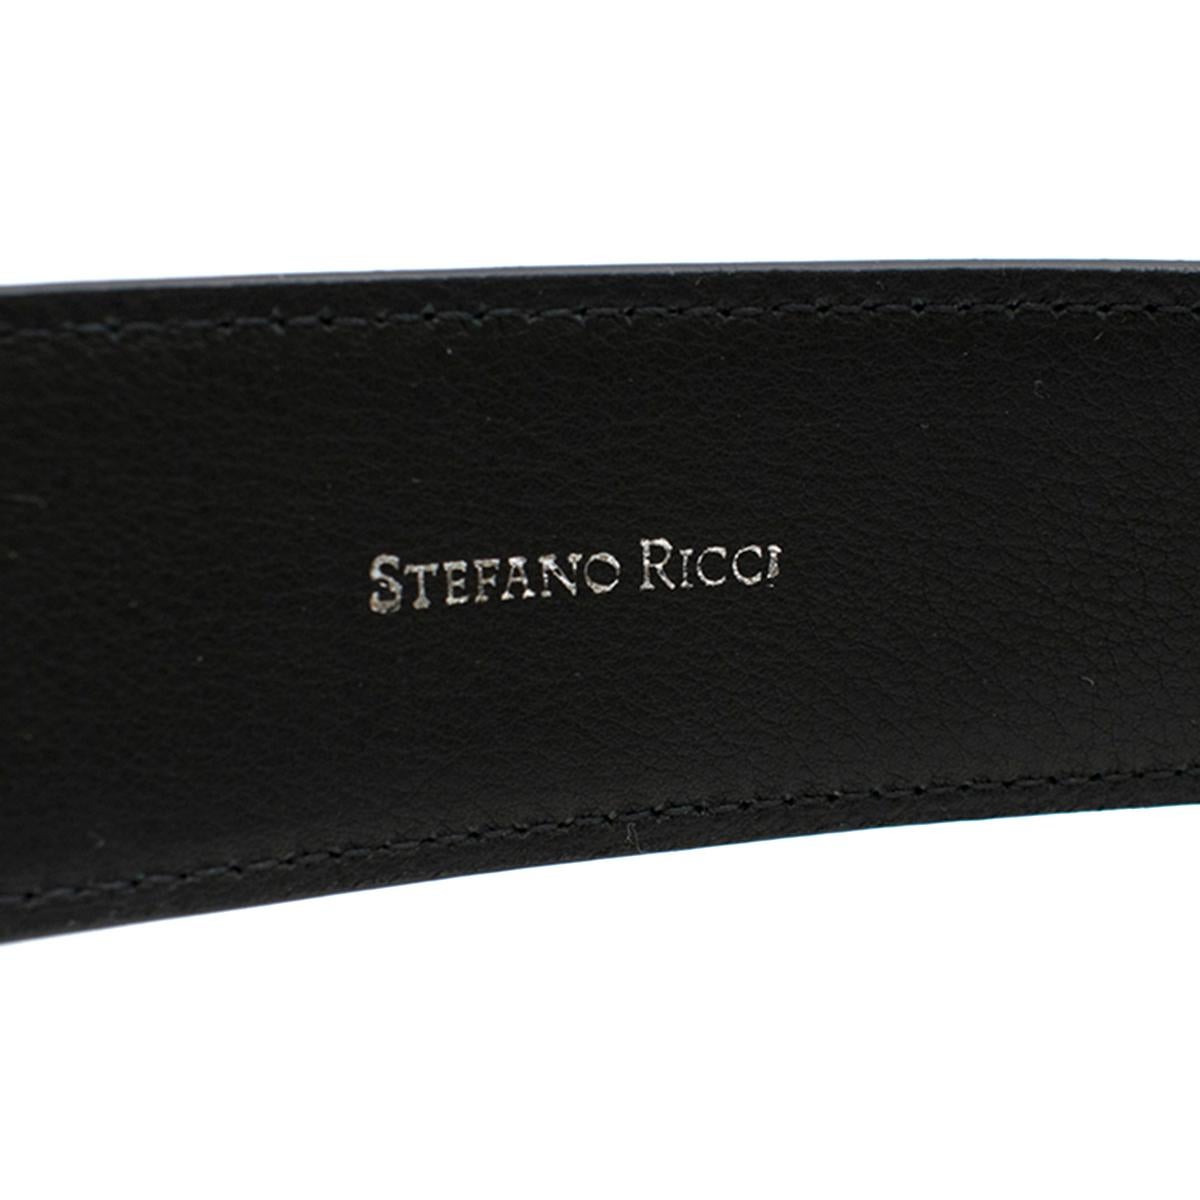 stefano ricci most expensive belt